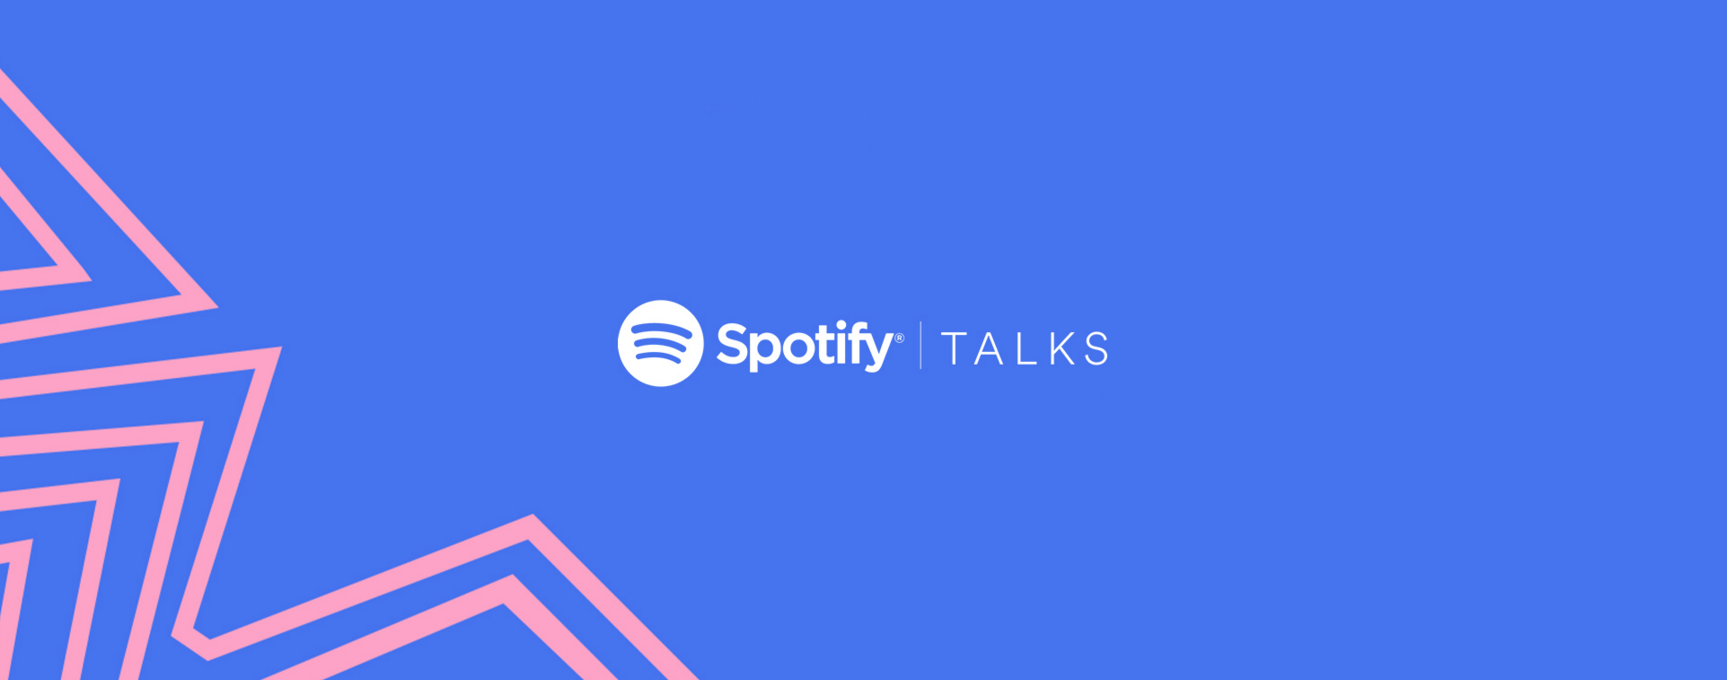 EXCLUSIVE: Spotify announces ideas series Spotify Talks